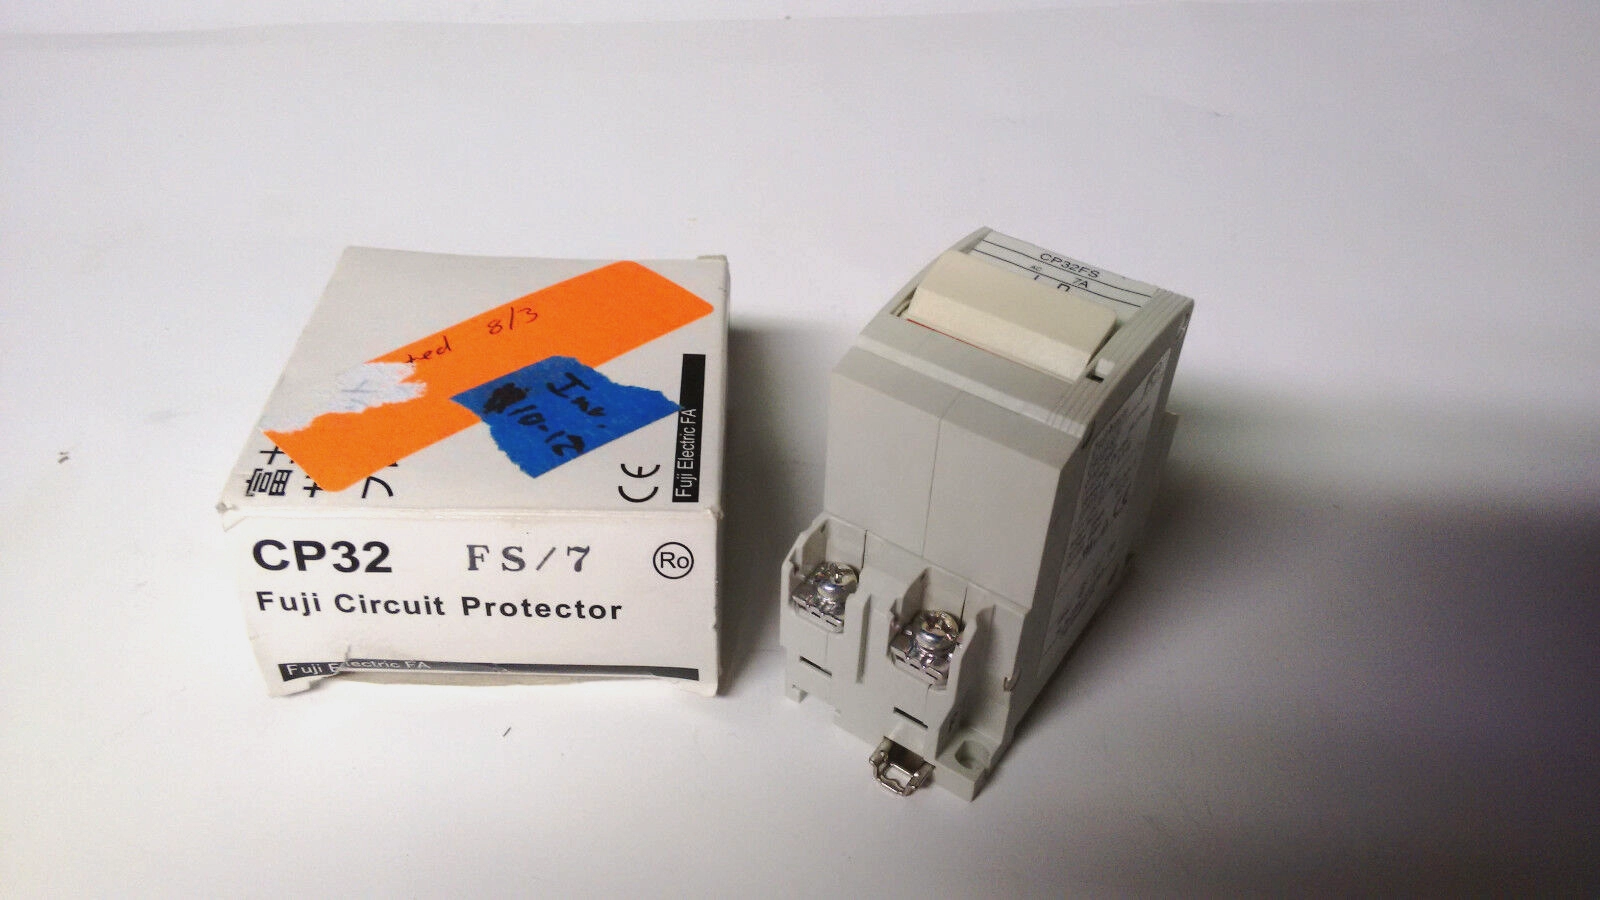 NEW: Fuji CP32FS/7 Circuit Protector 120V DC